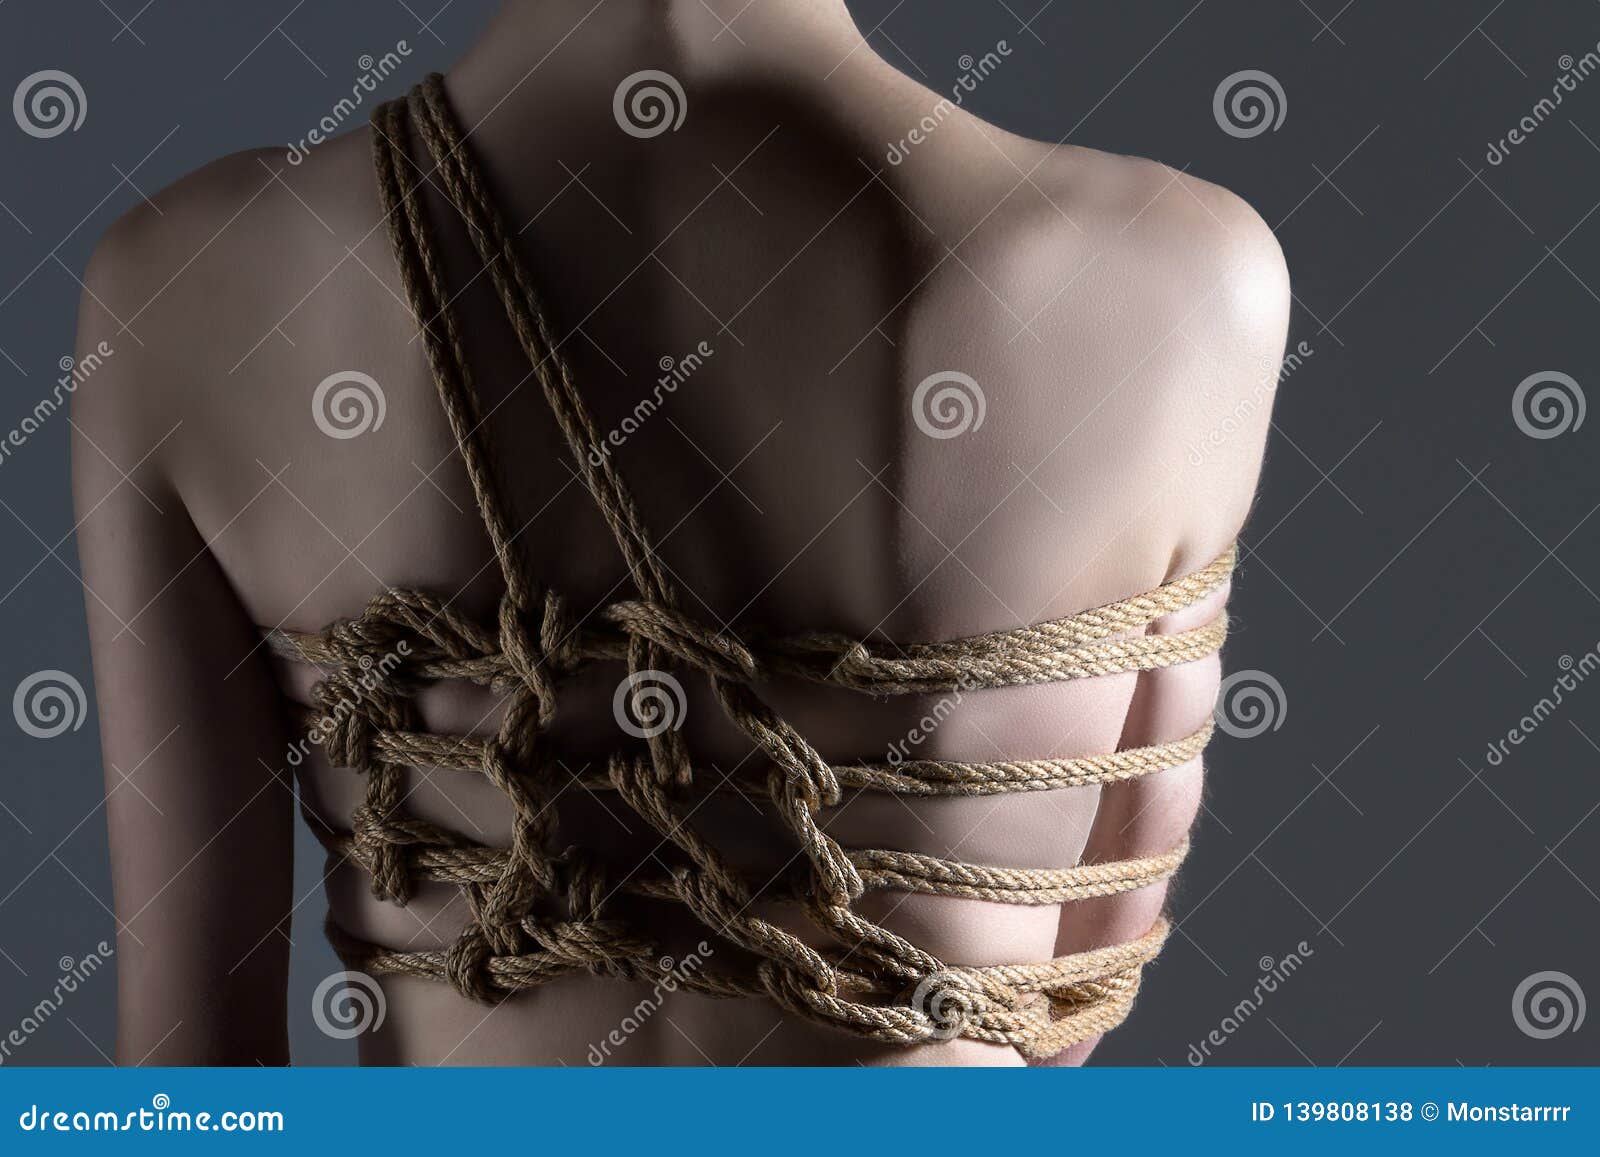 Woman in Art Bandage Tying with Rope Shibari Style pic photo